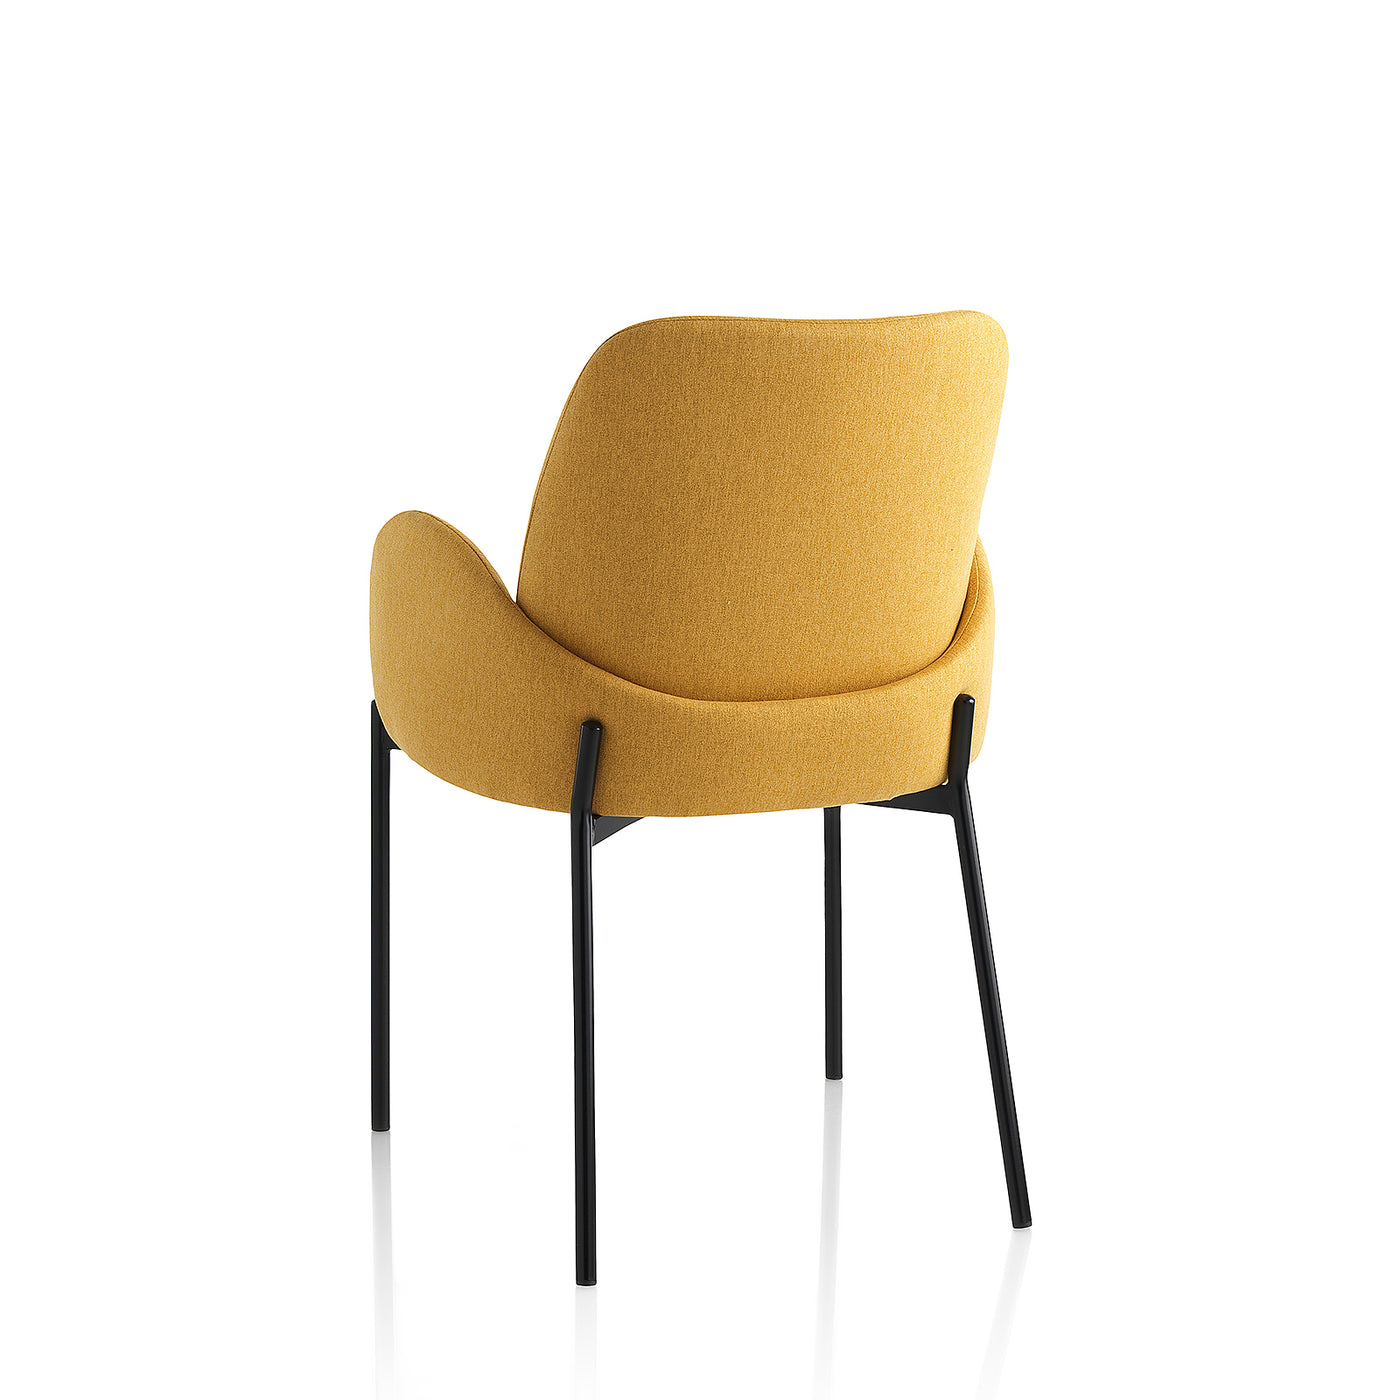 Set of 2 KIS mustard chairs